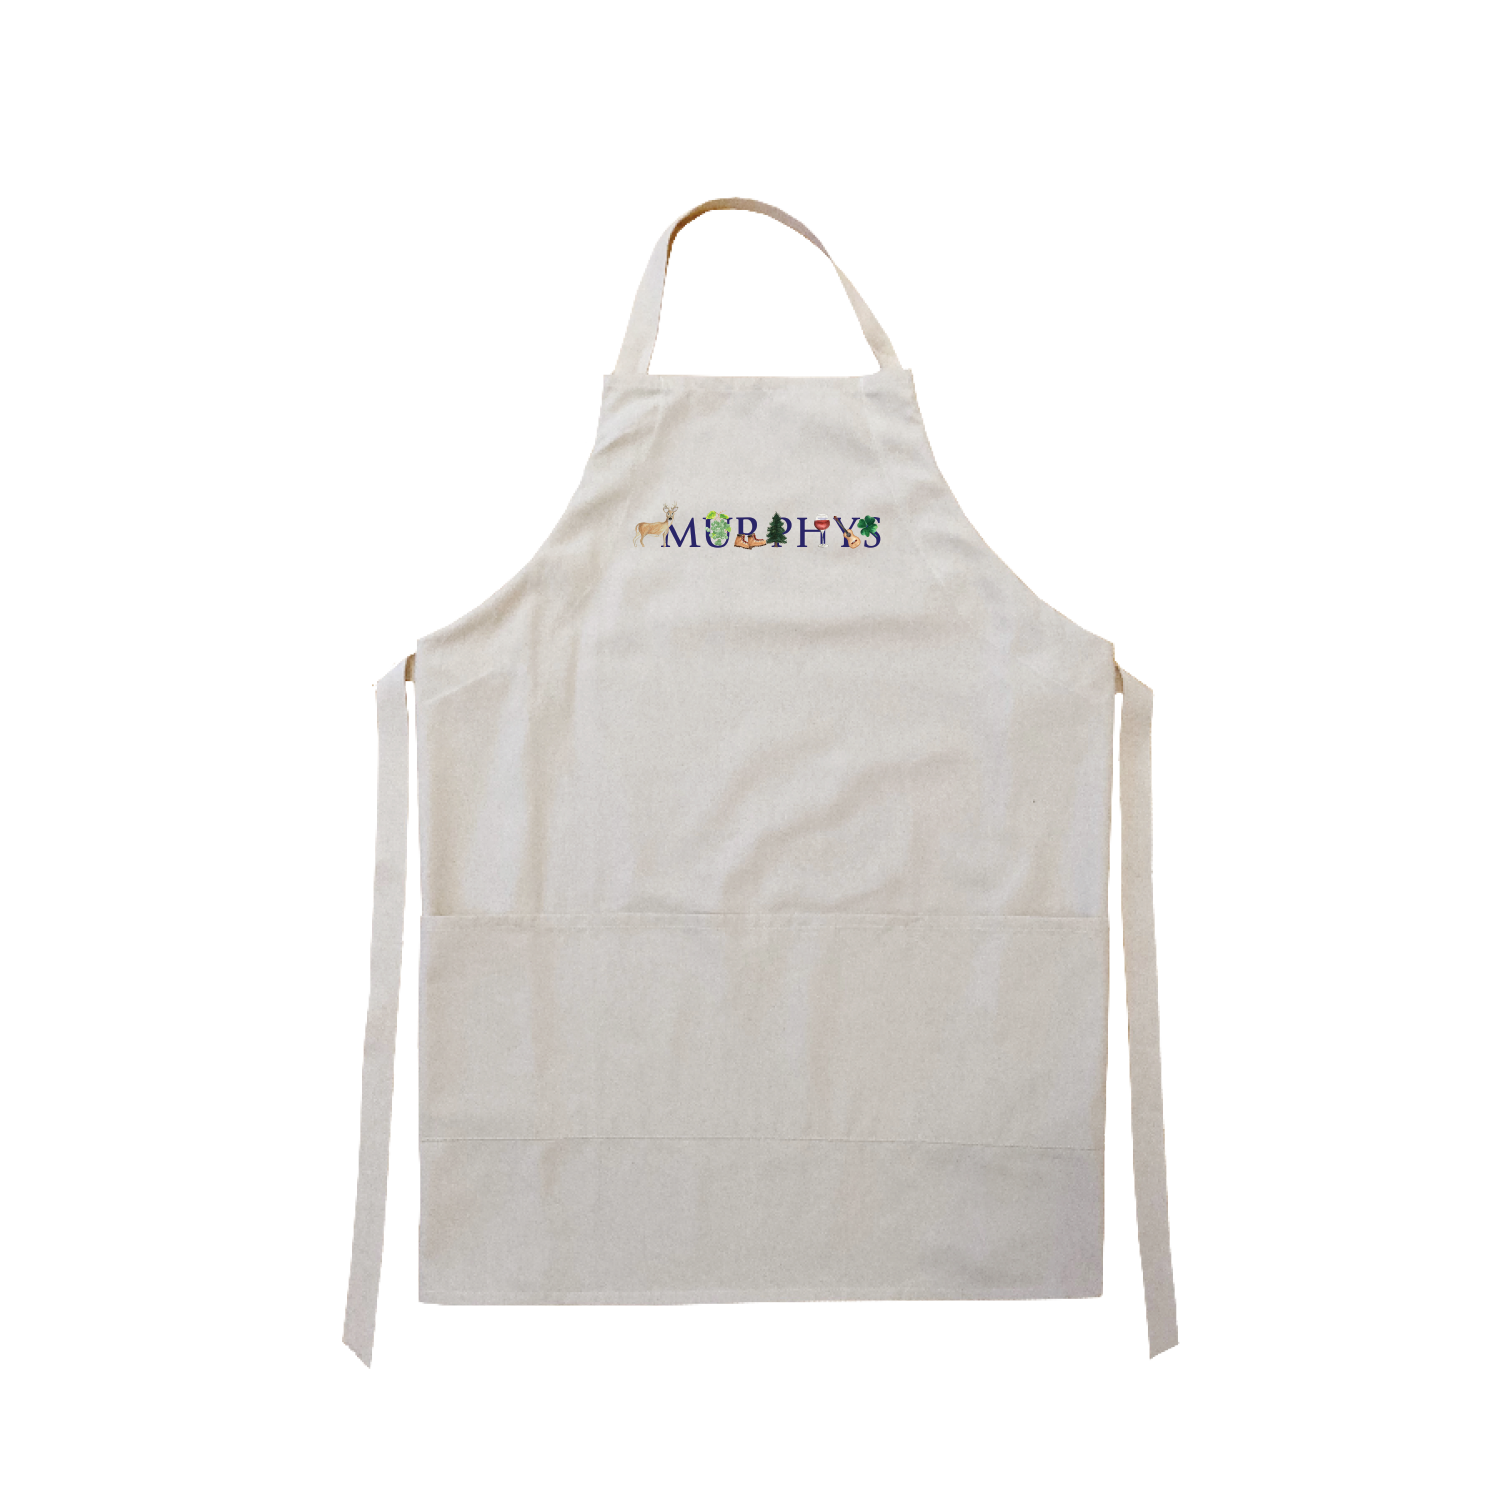 murphys apron